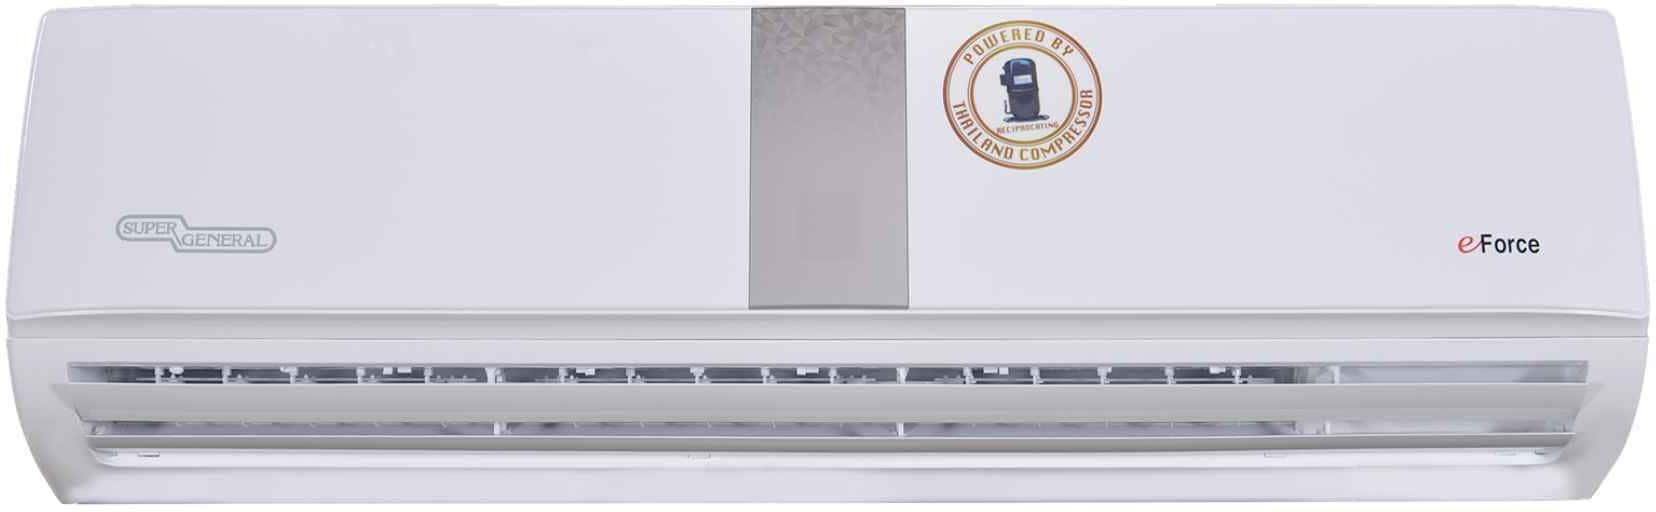 Super General Split Air Conditioner 1.5 Ton SGS191-4GE White